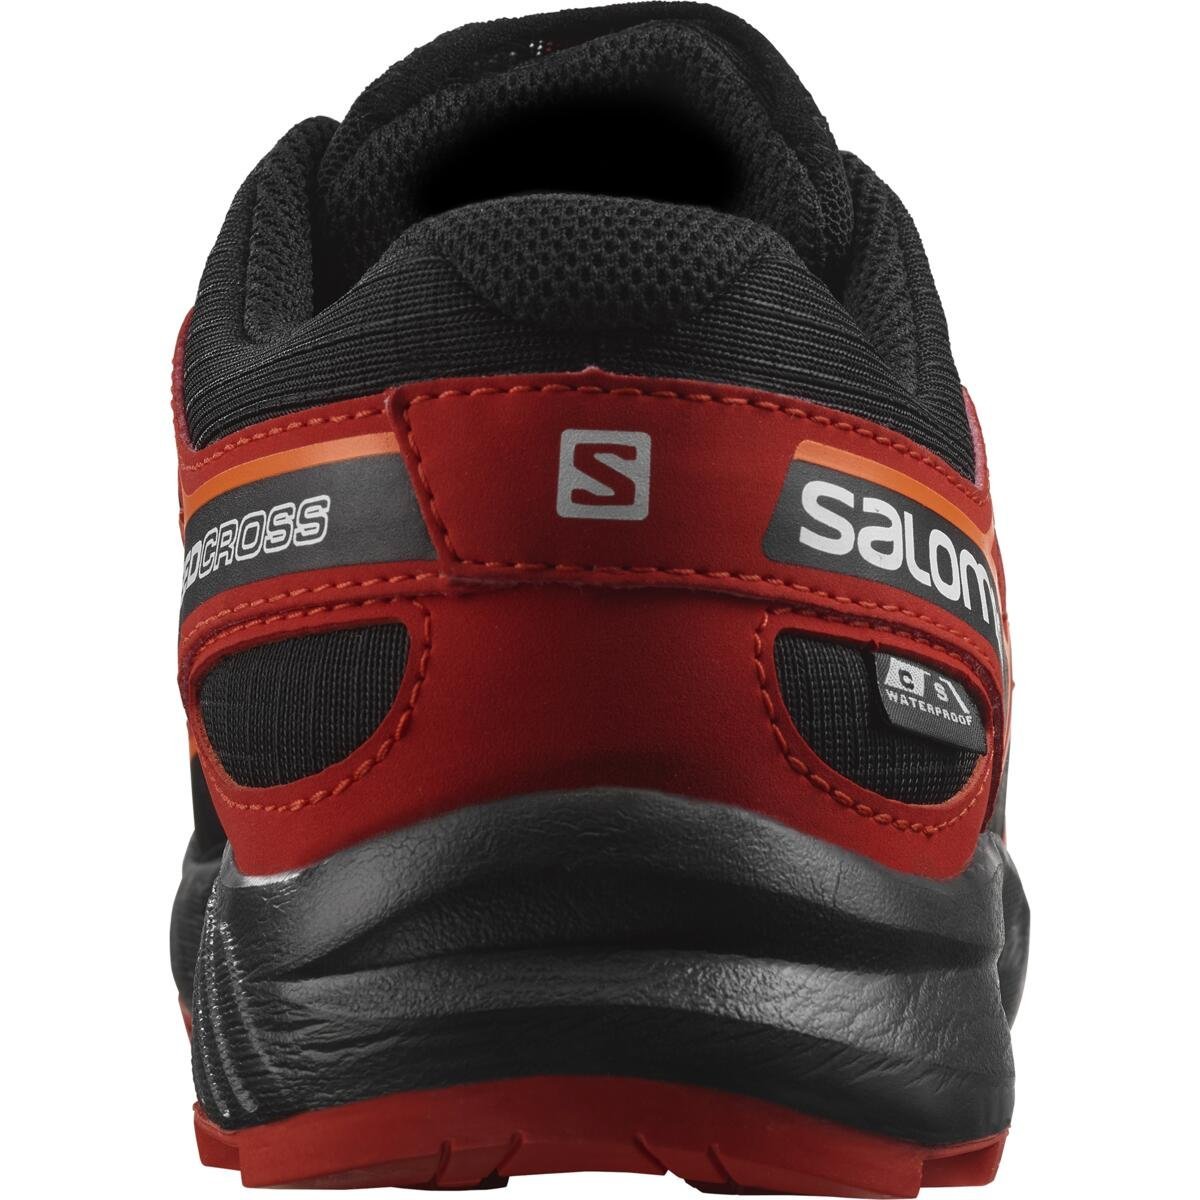 Obuv Salomon Speedcross CSWP J - čierna/červená